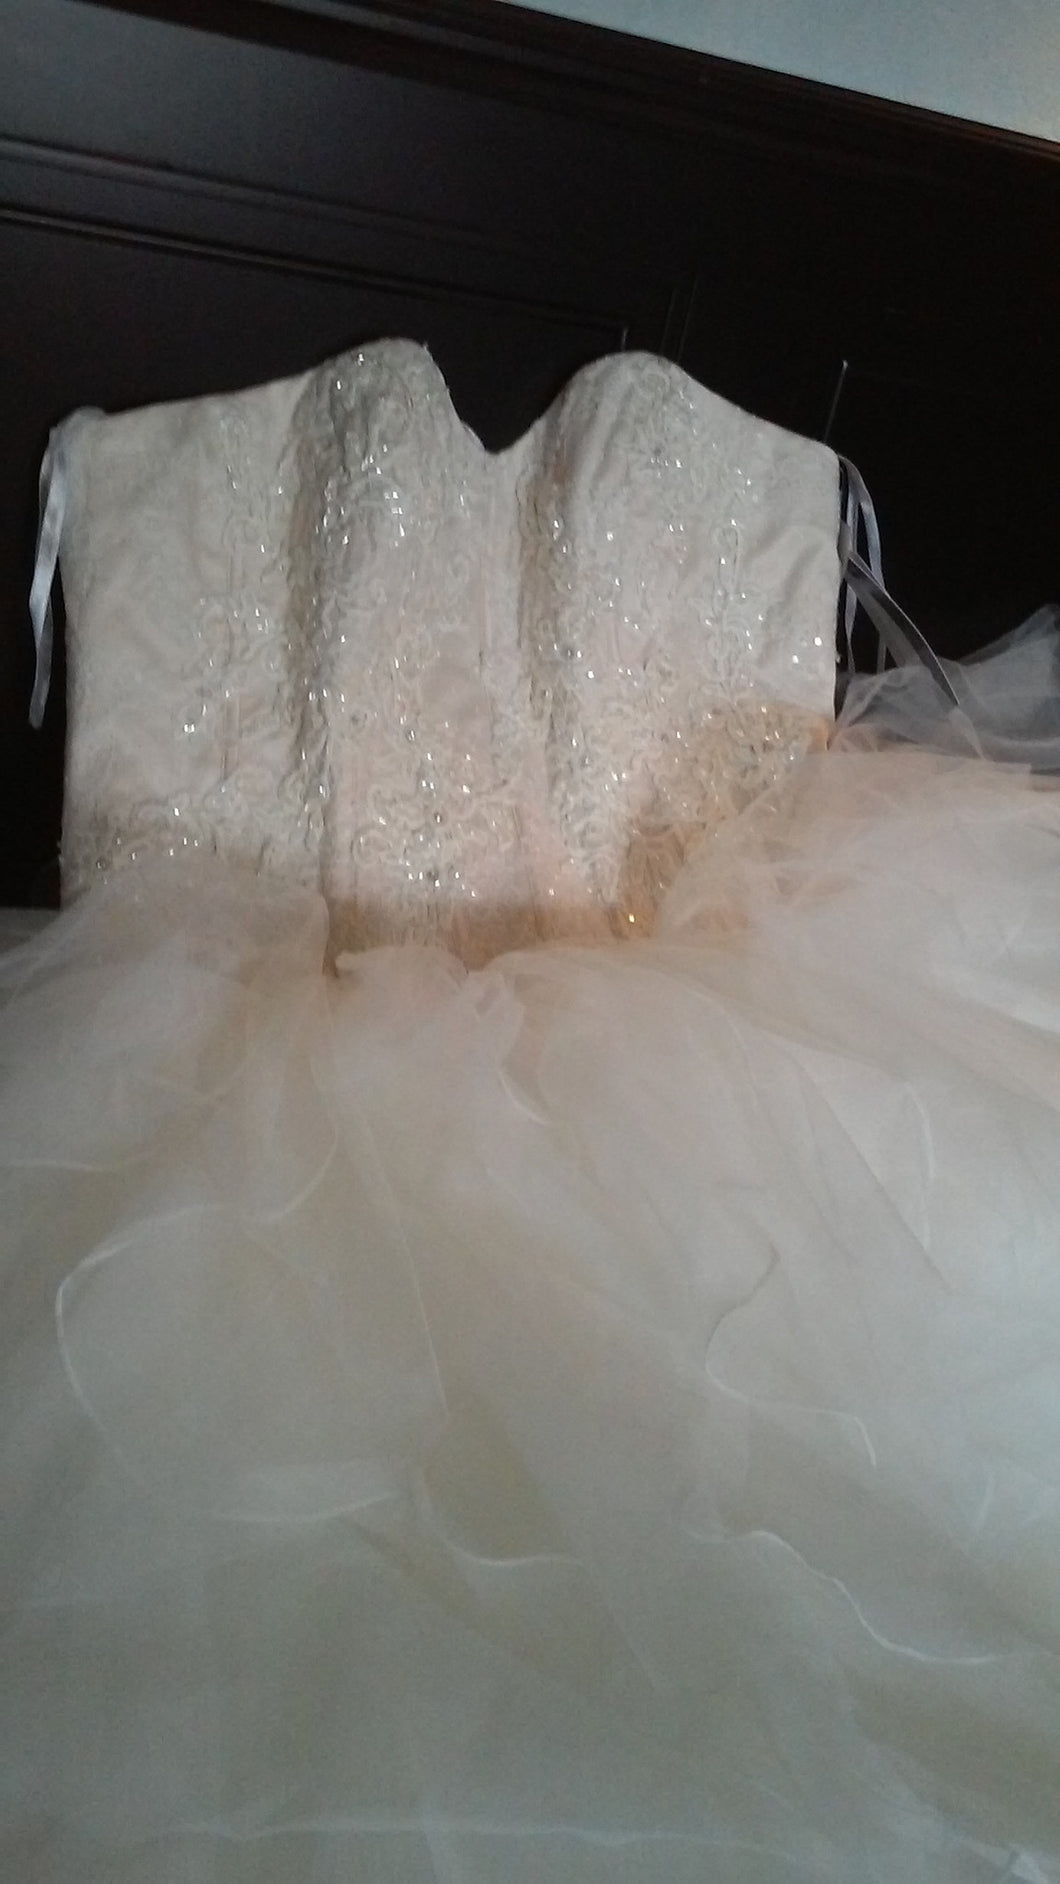 Oleg Cassini 'Strapless' size 18 new wedding dress front view of dress